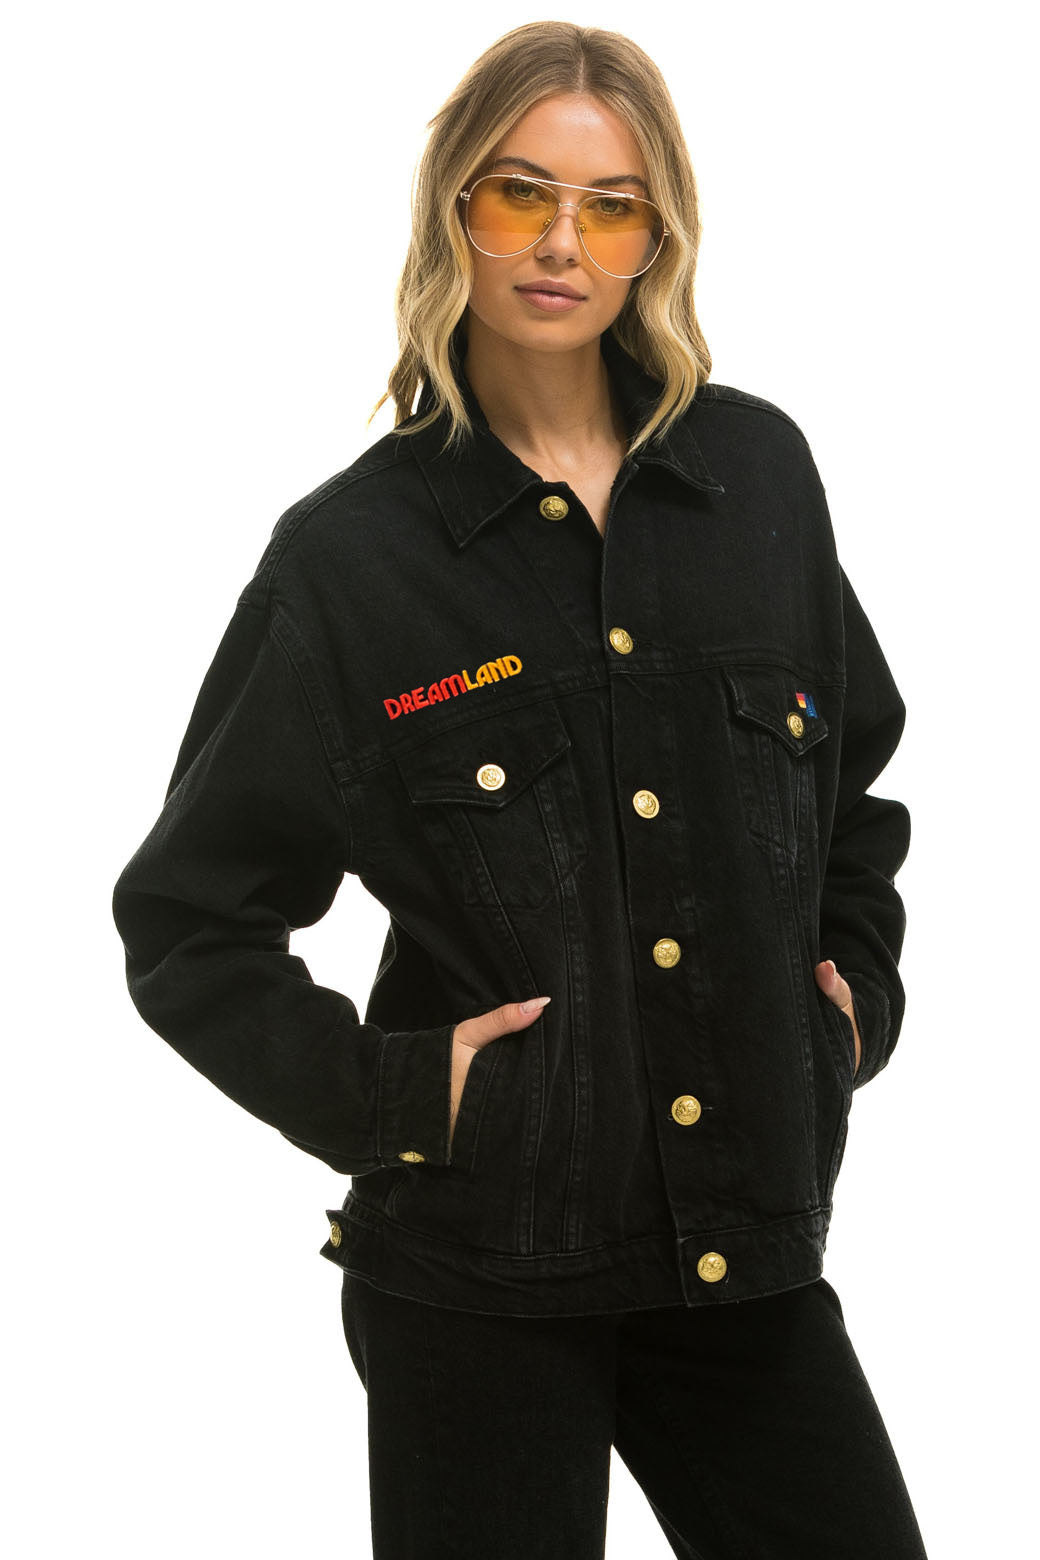 Discover more than 201 vintage oversized denim jacket mens latest